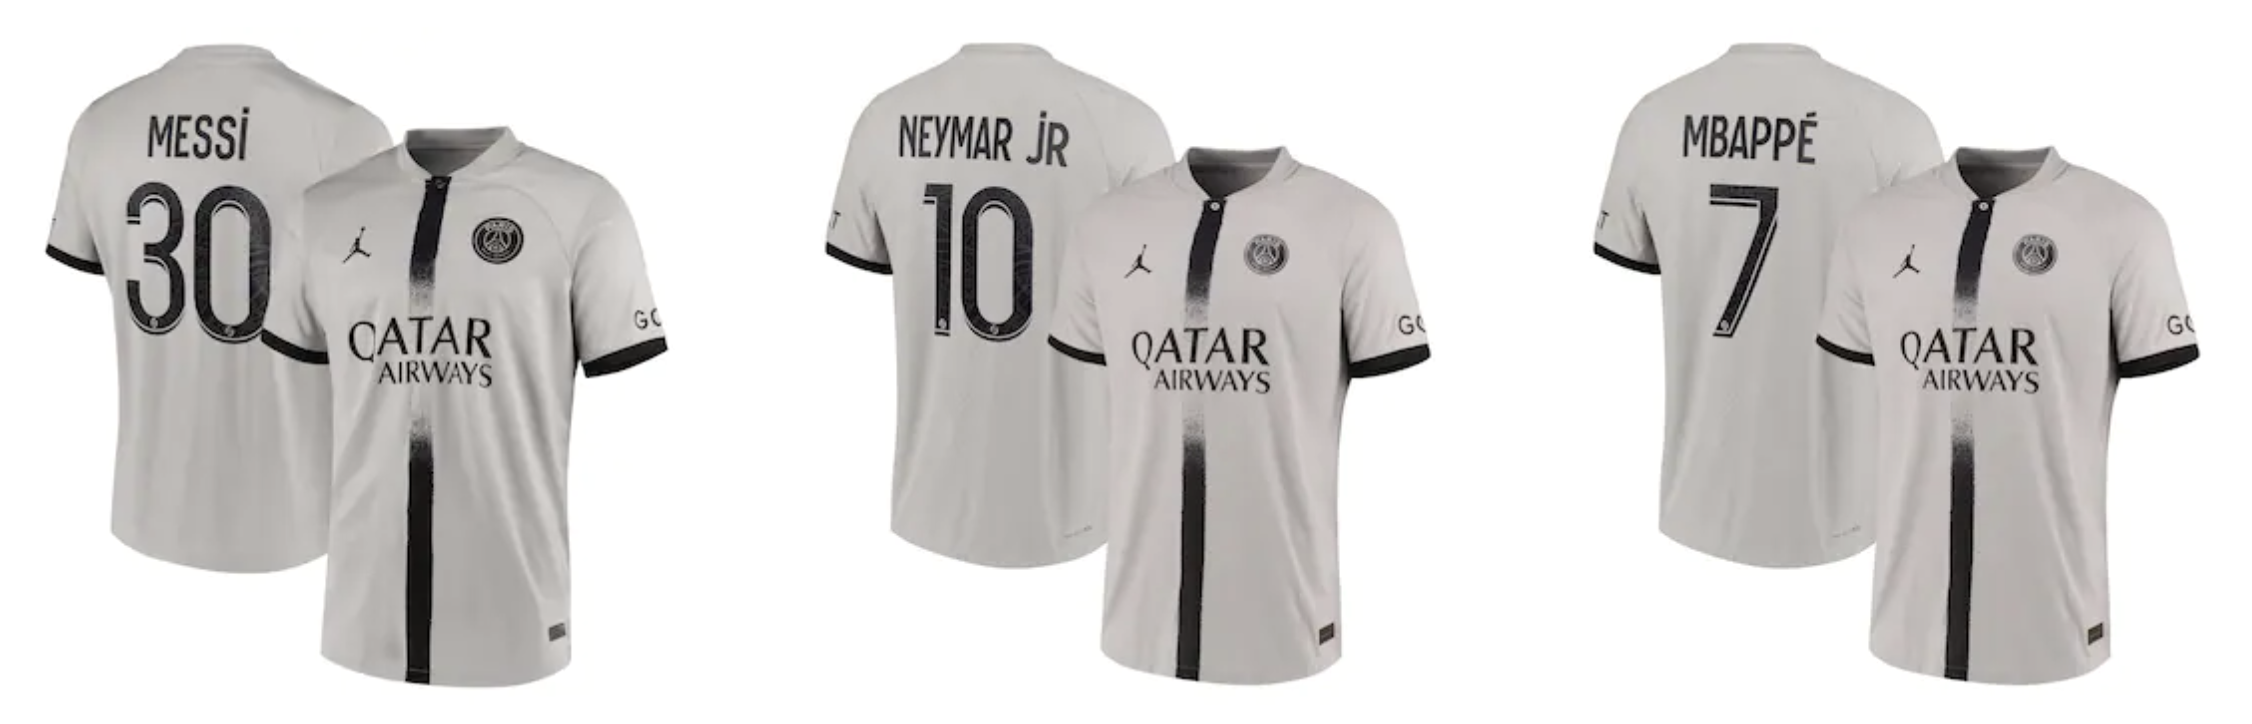 NIKE Adidas YOUTH JERSEYS M, L, XL NWOT PSG MLS Timbers Messi Mbappe Neymar